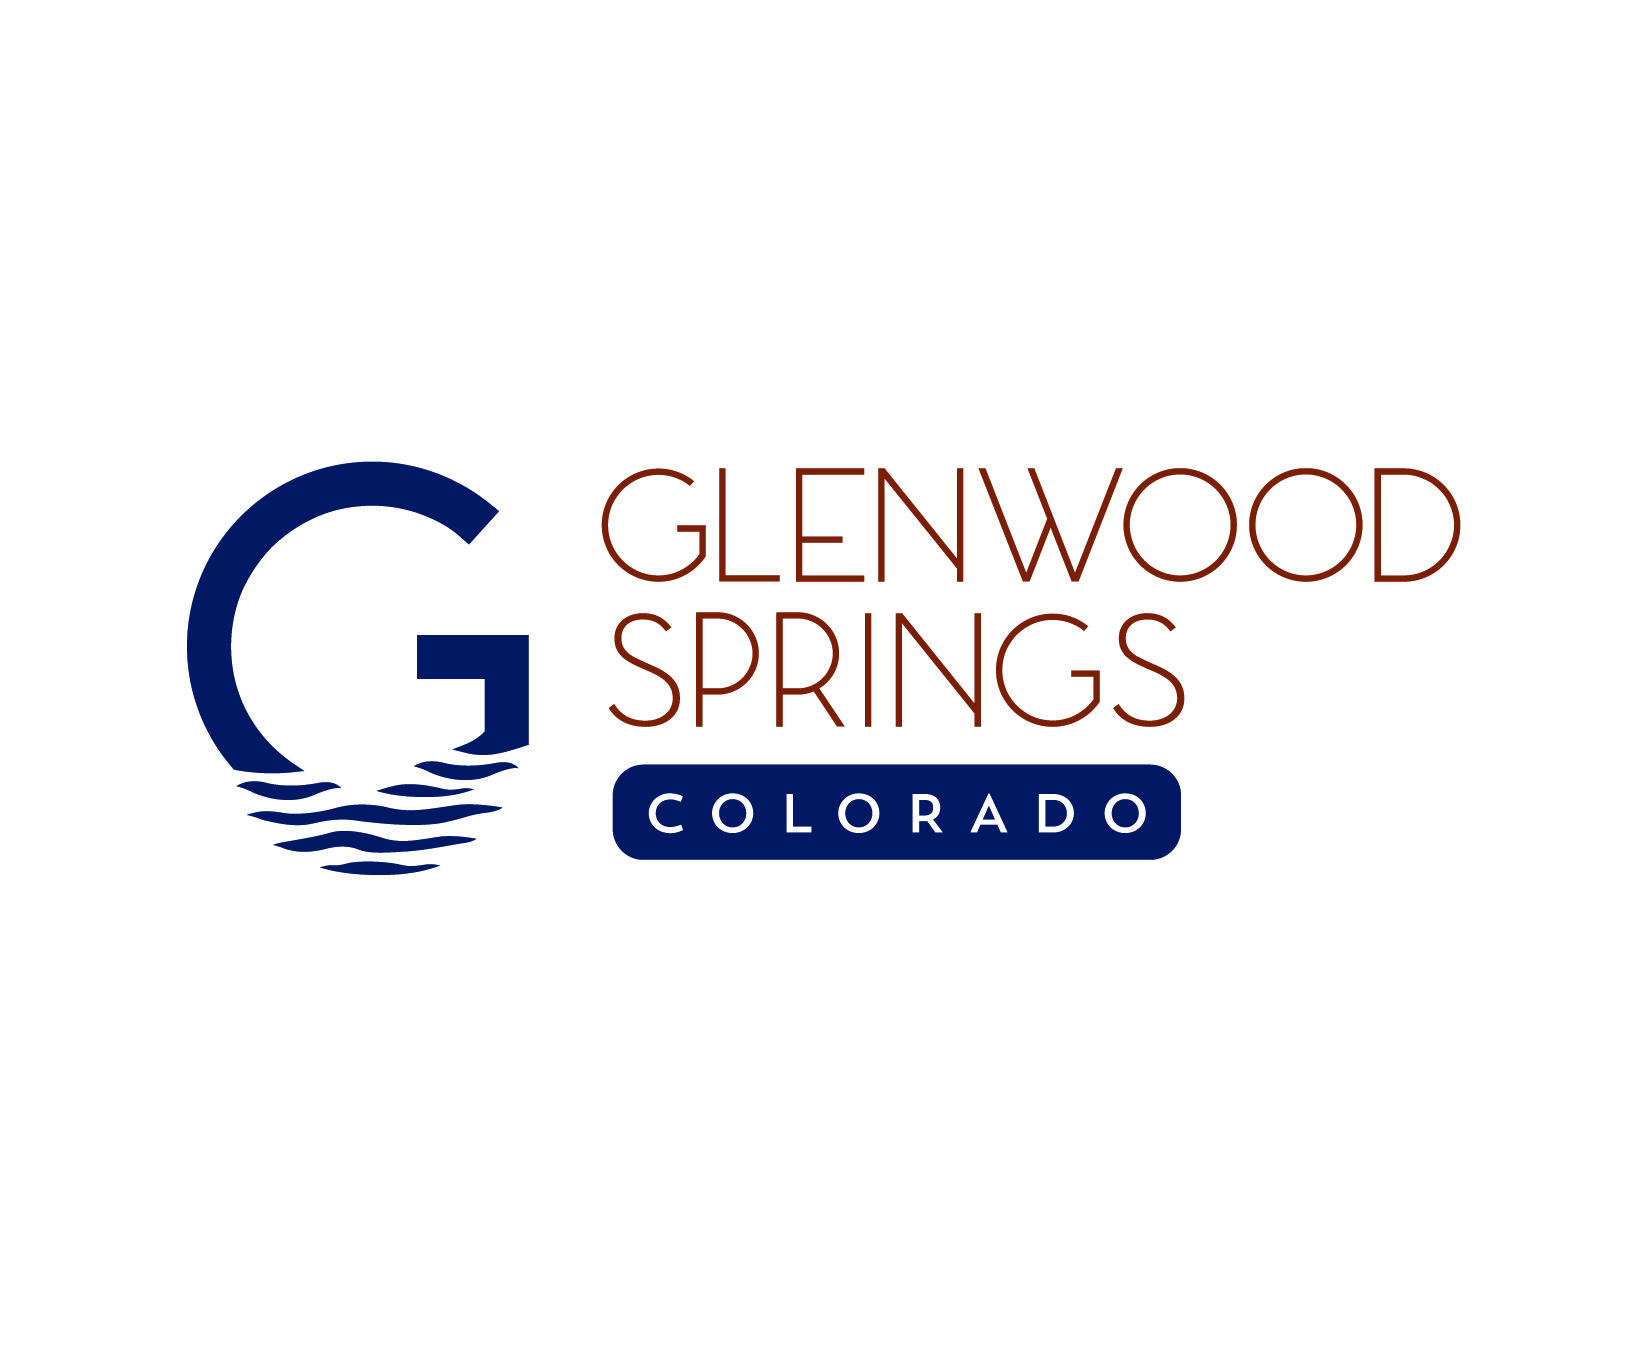 alternative version of new Glenwood Springs logo